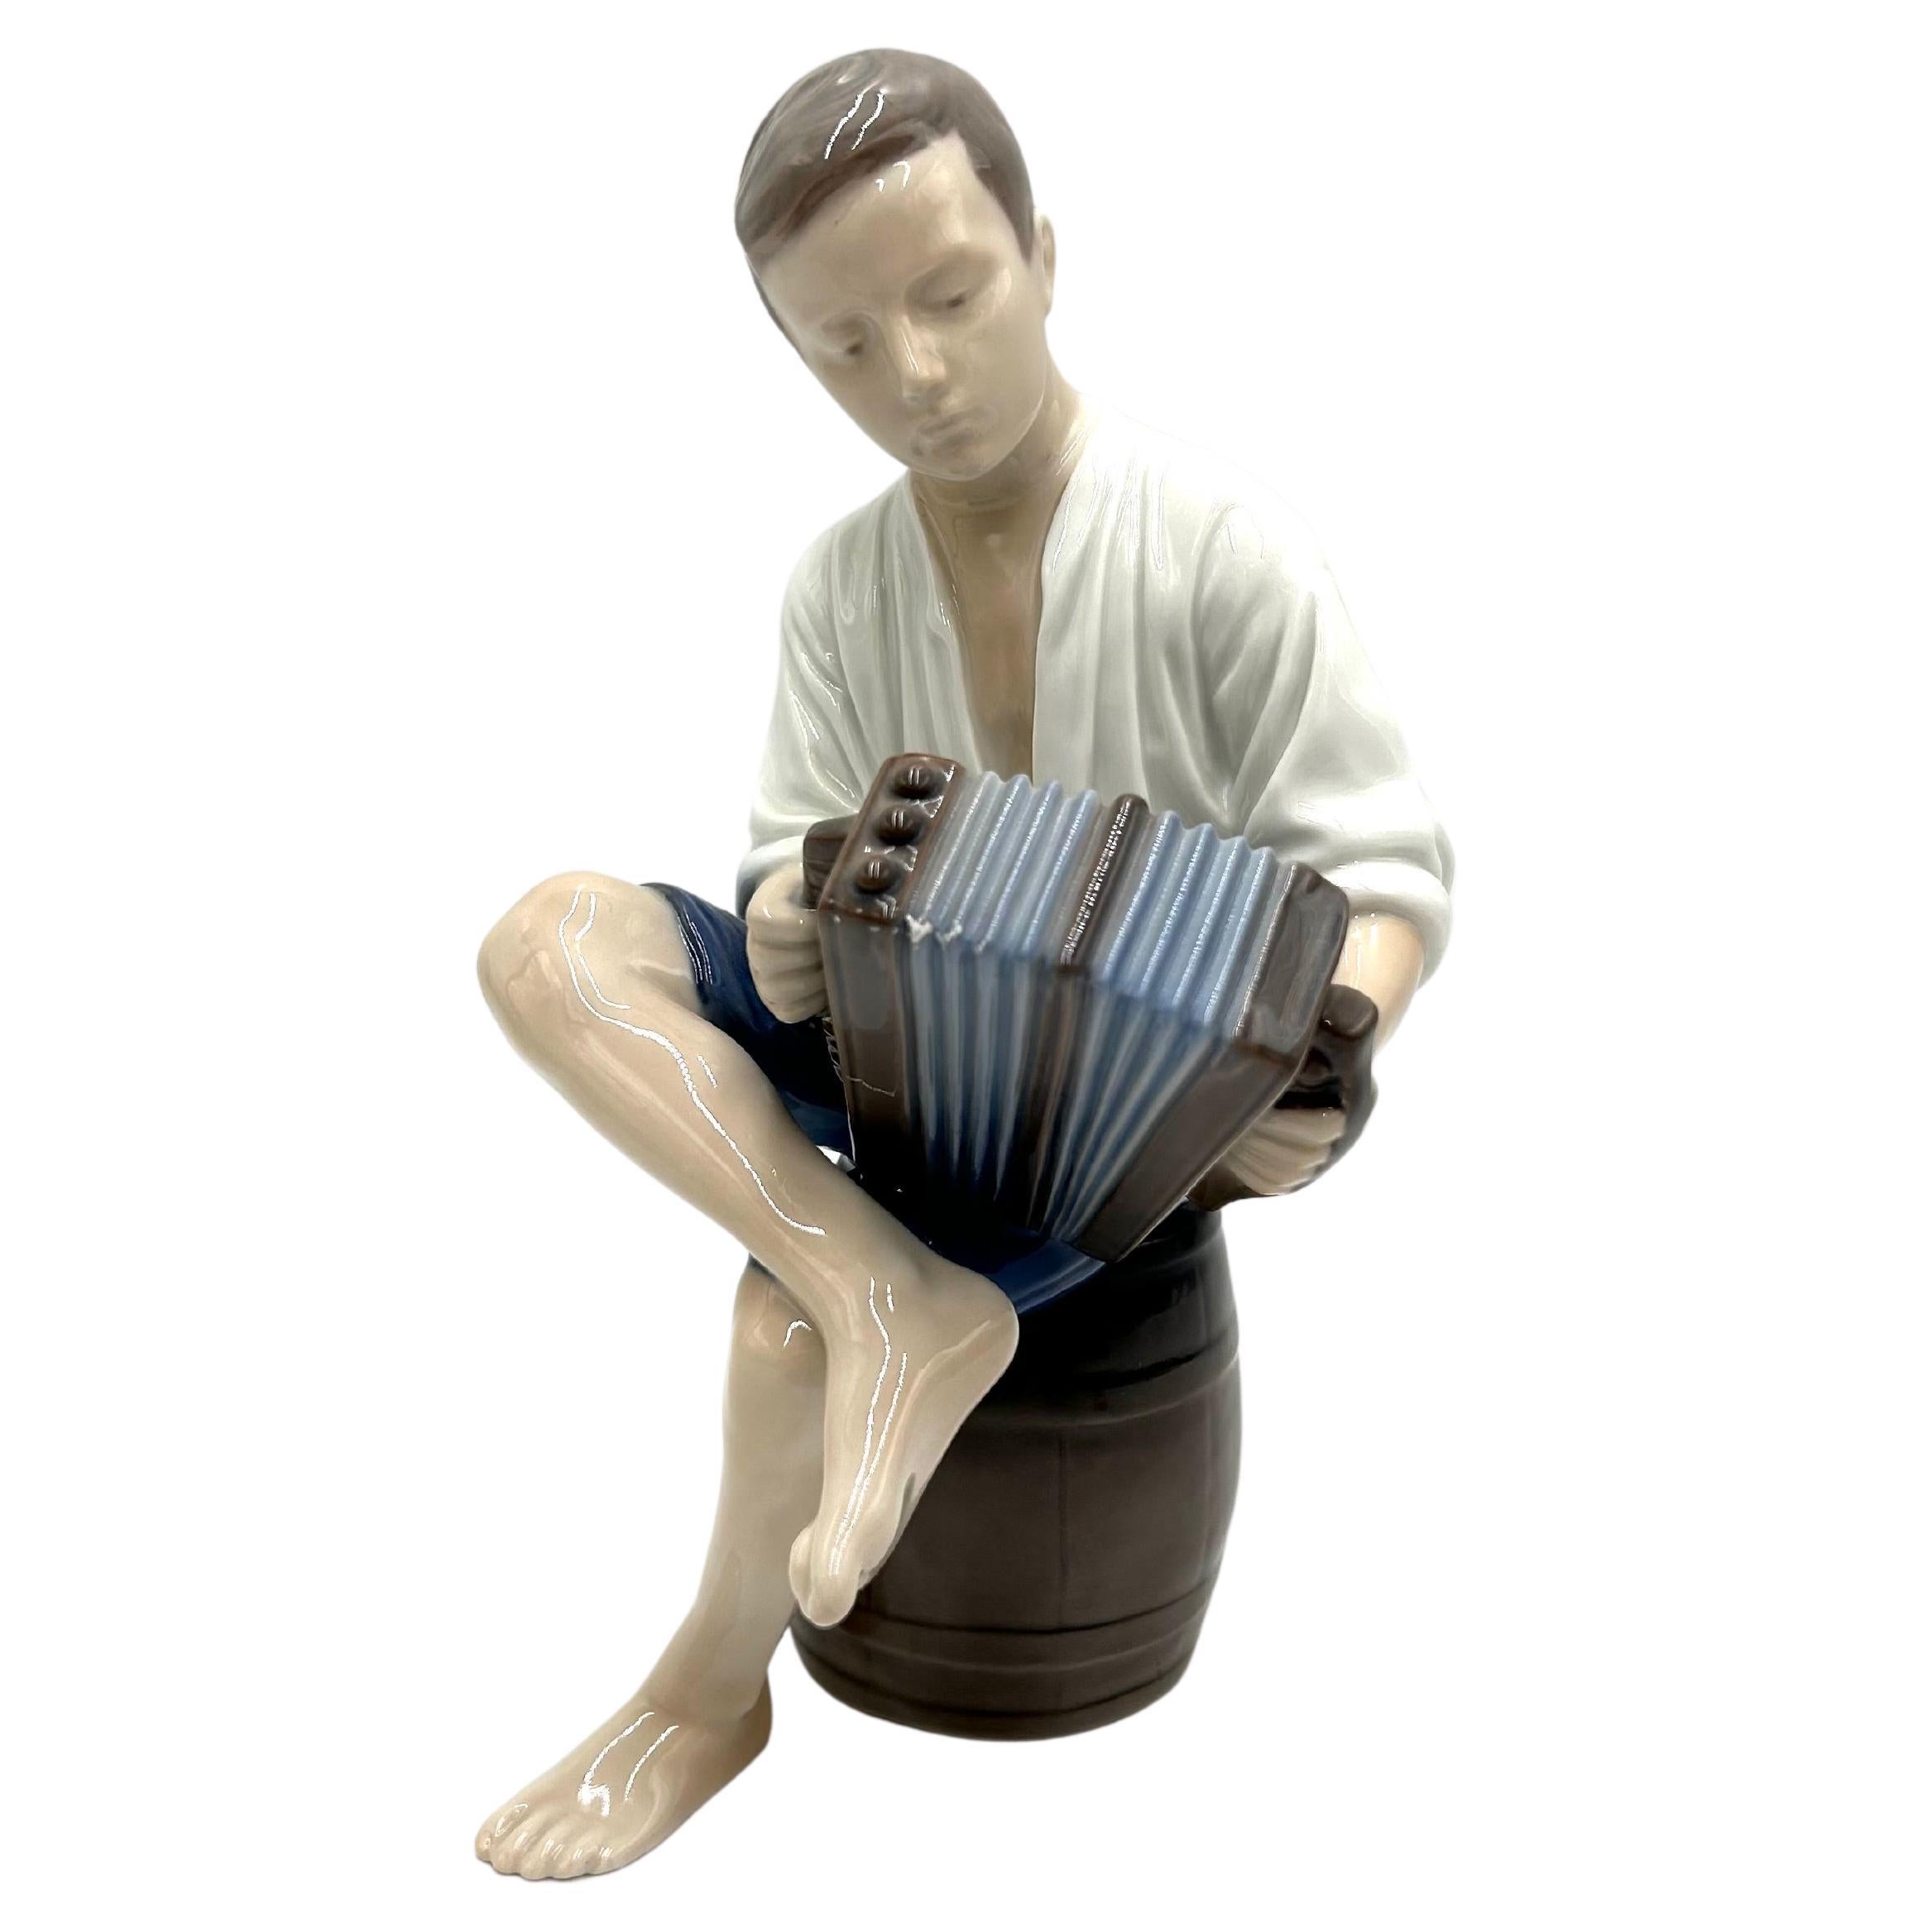 Figurine en porcelaine « garçon avec un accordéon », Bing & Grondahl, Danemark, années 1950